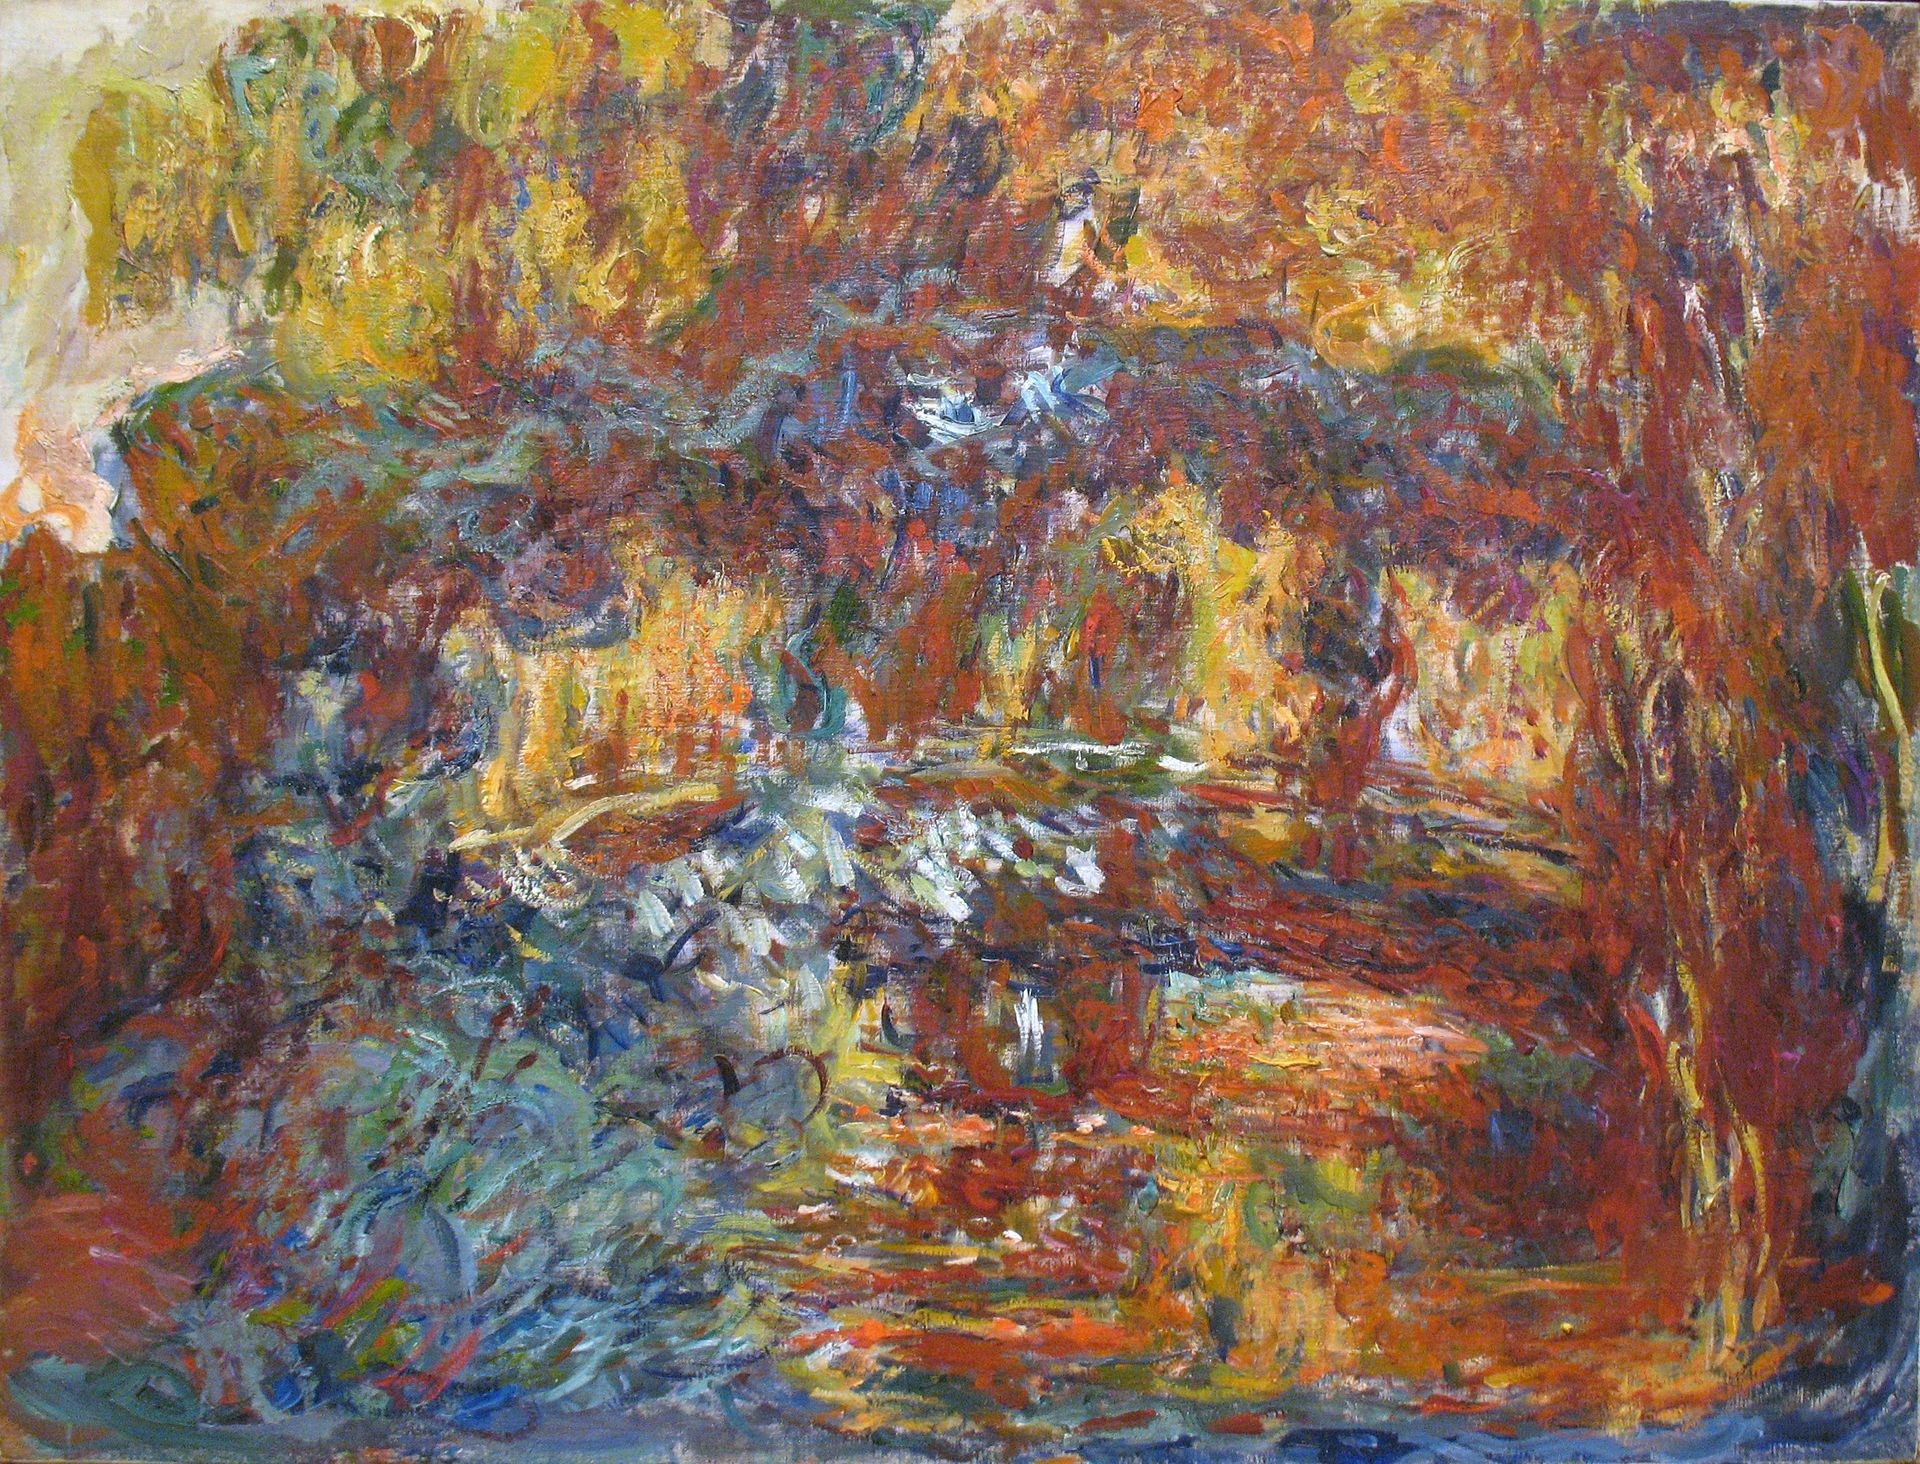 Claude Monet The Japanese Bridge, c. 1920-22 Oil on canvas, 89x116 cm Museum of Modern Art, New York